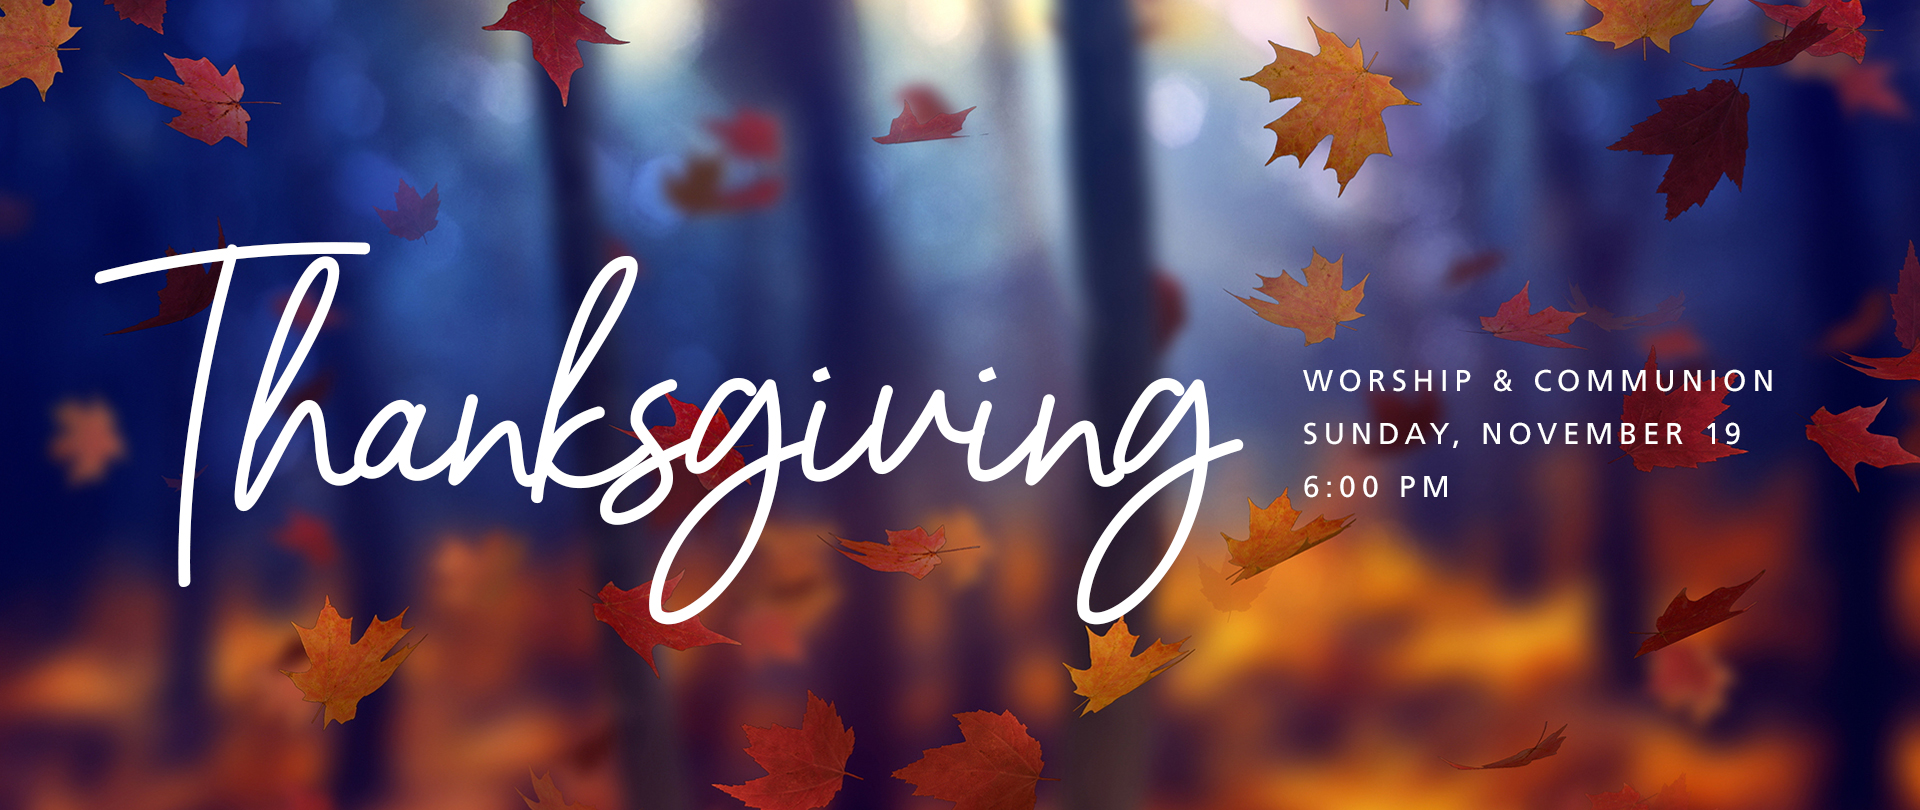 Thanksgiving Service
Sunday, November 19 at 6:00 PM
Worship & Communion
